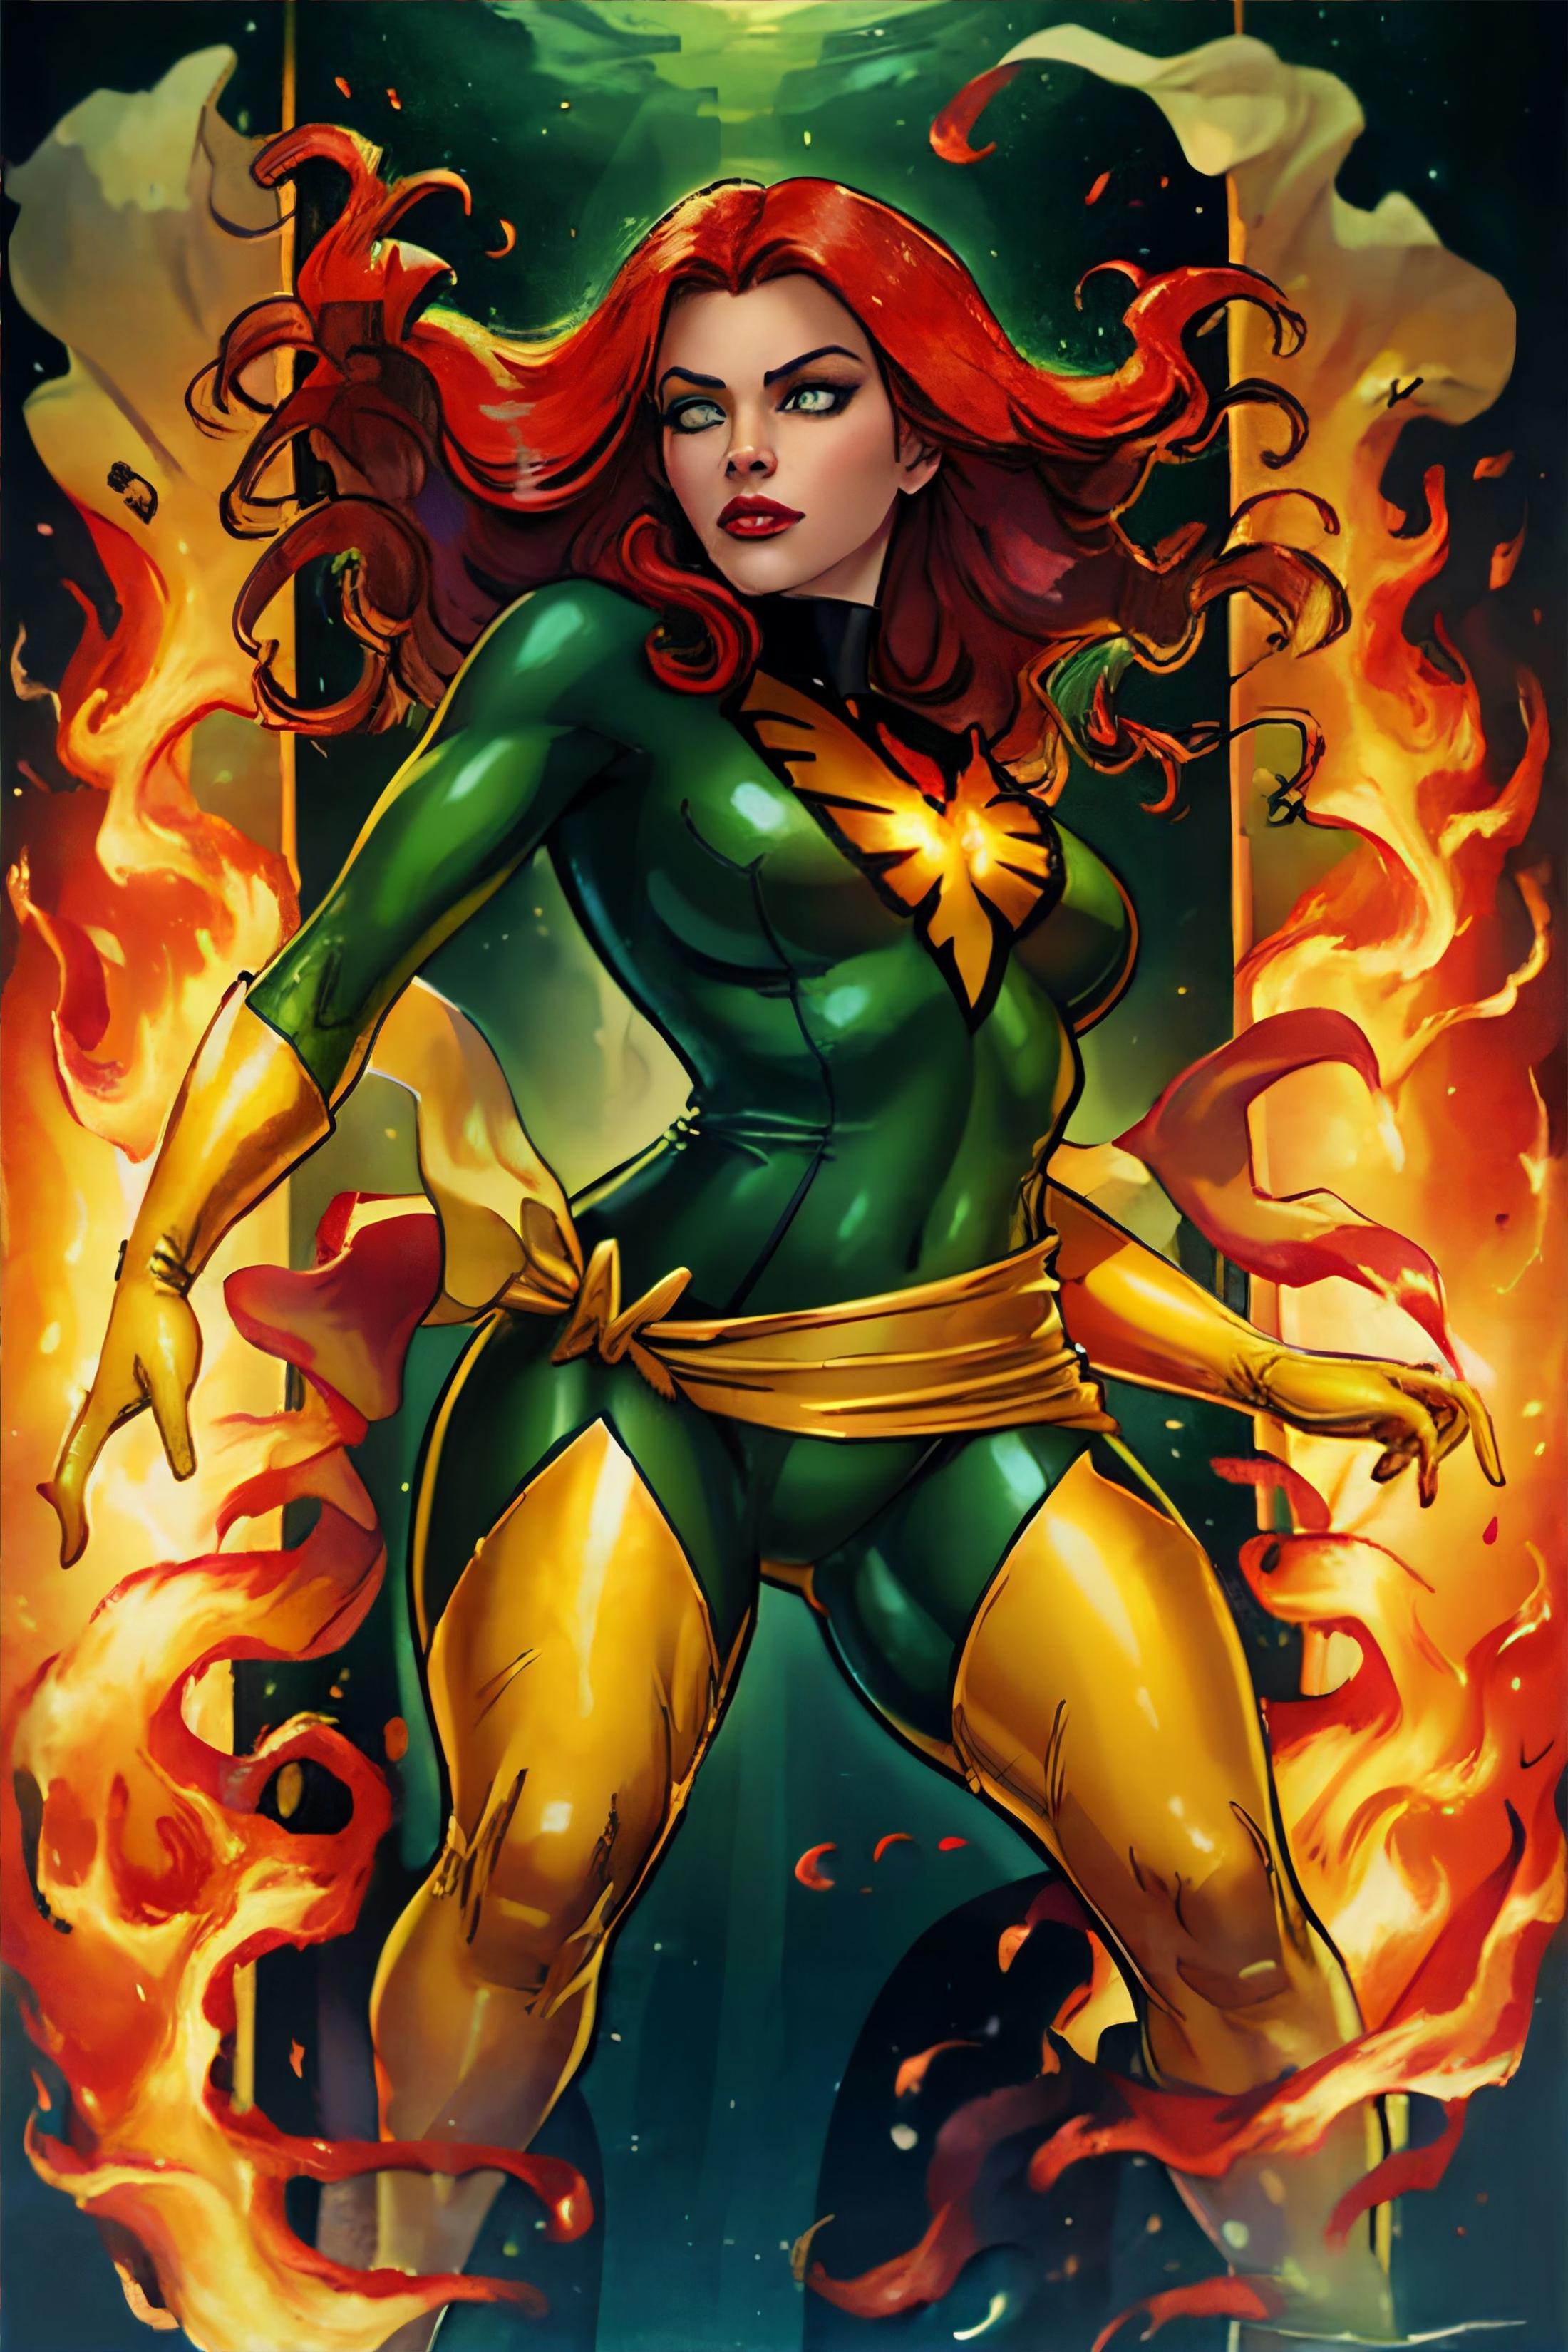 Jean Grey (X-Men) LoRA image by Crash67